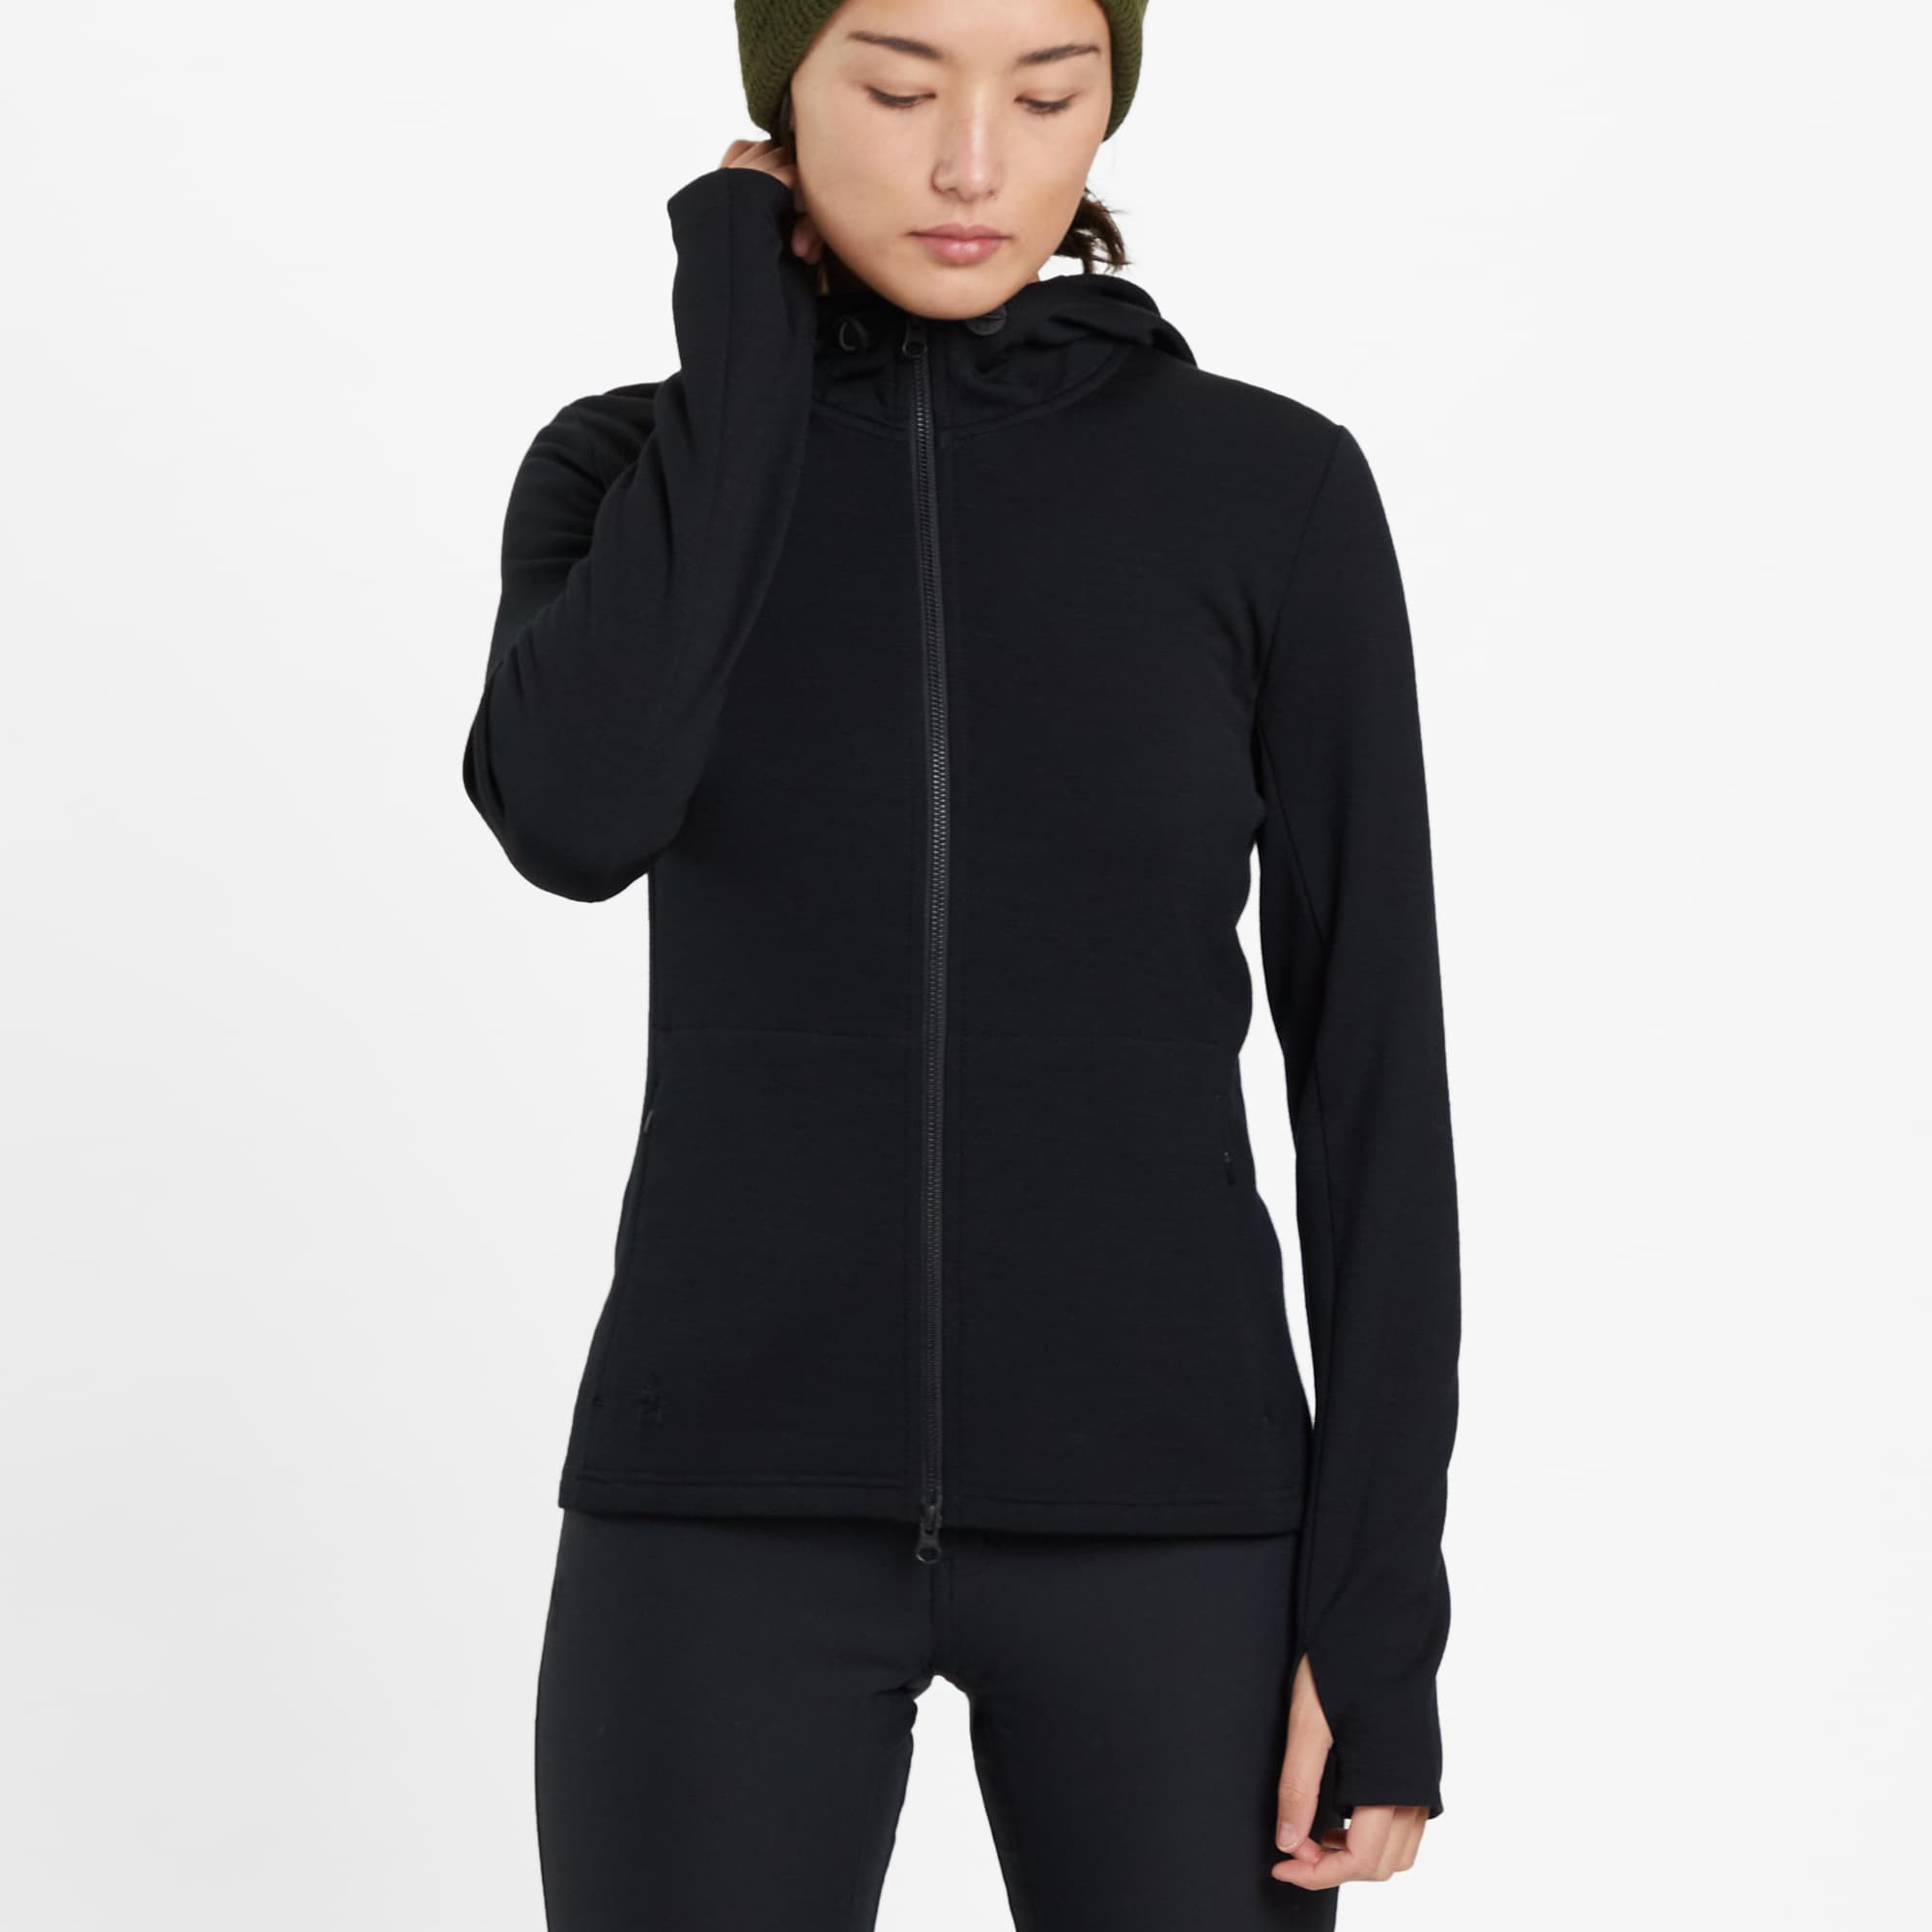 Women's Merino blend performance hoodie in black worn by a woman